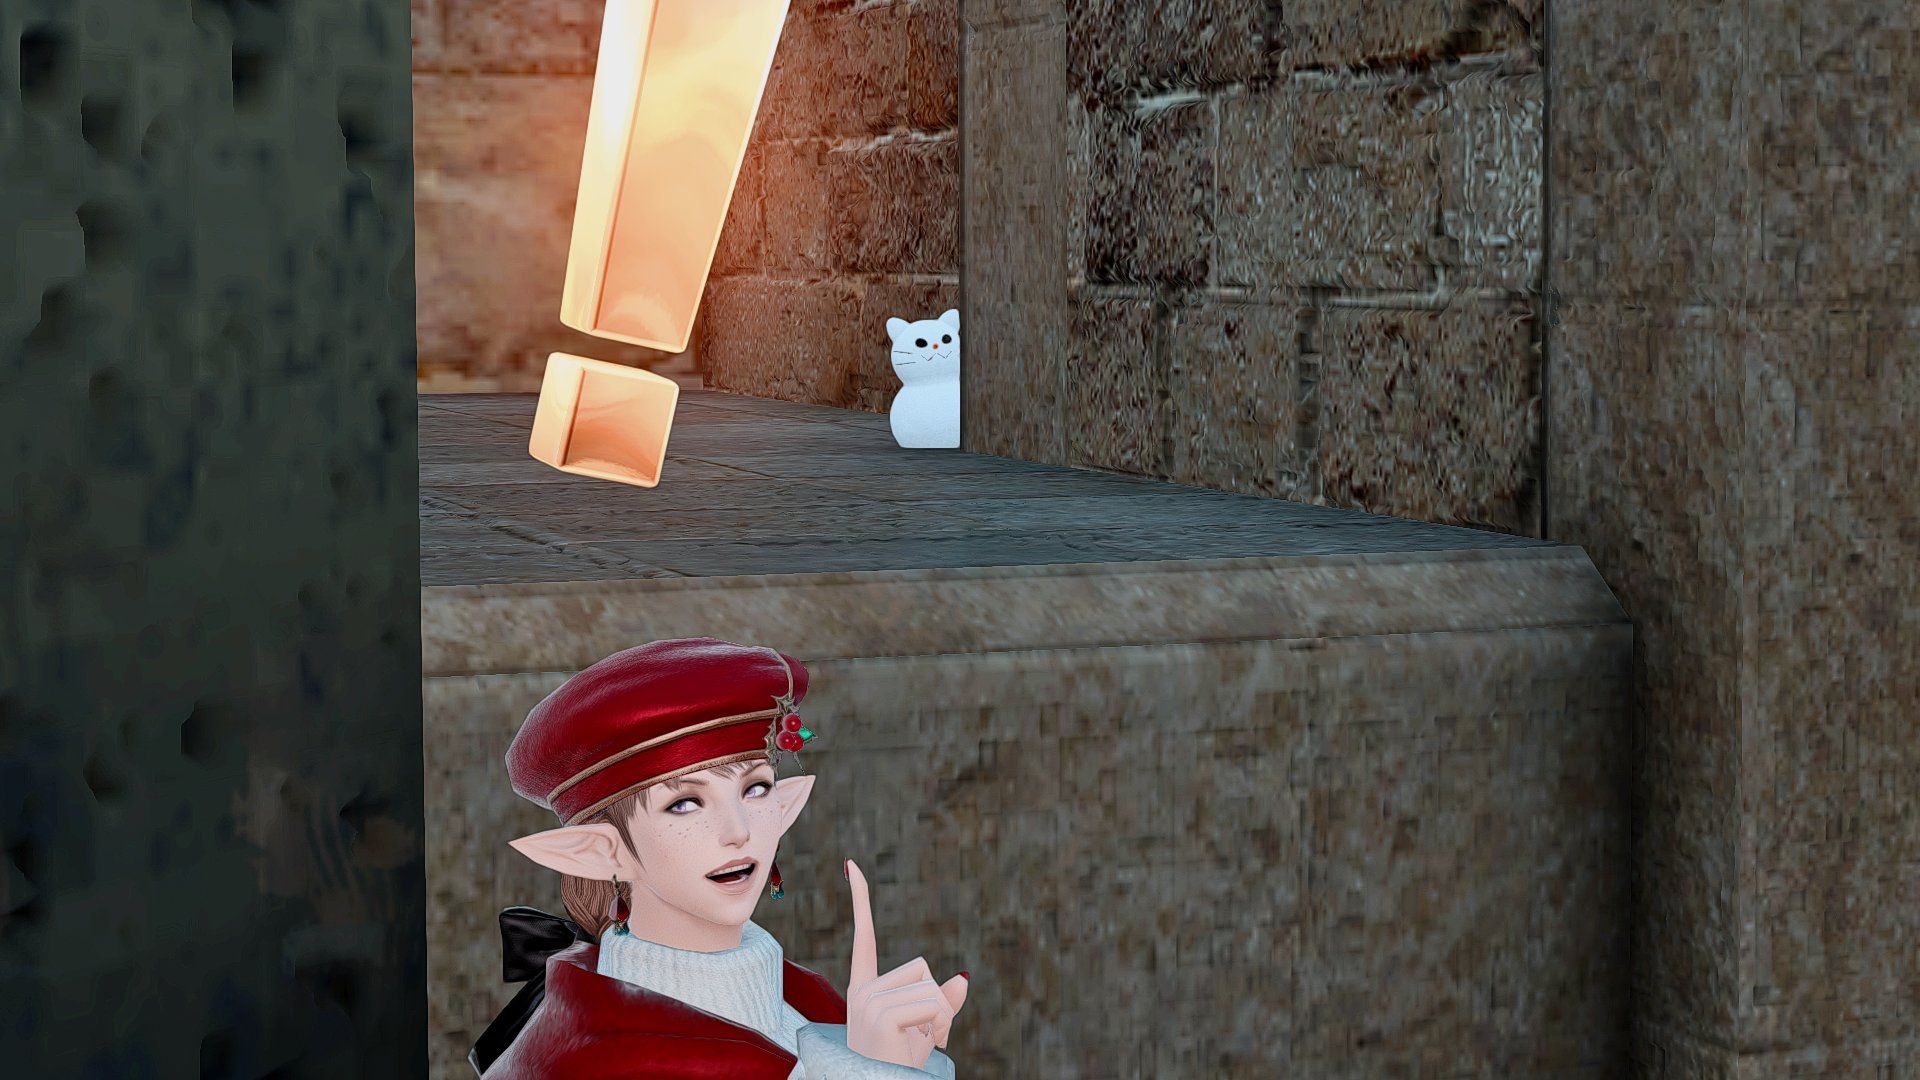 Final Fantasy 14 Ashara finding the cat snowman in Uldah